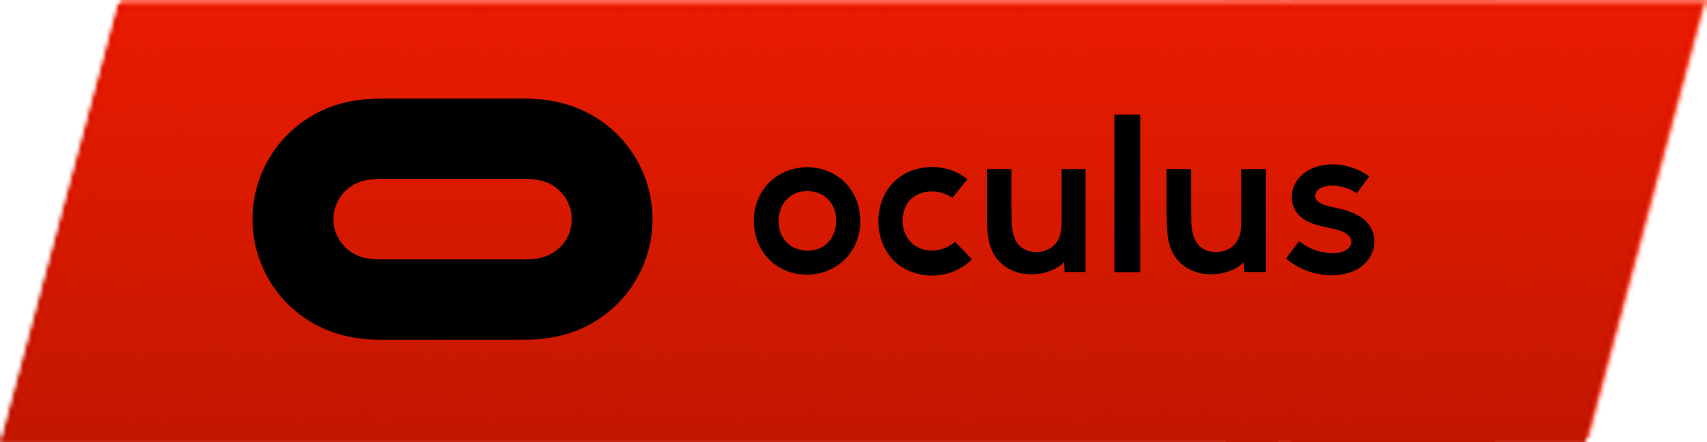 Buy on Oculus